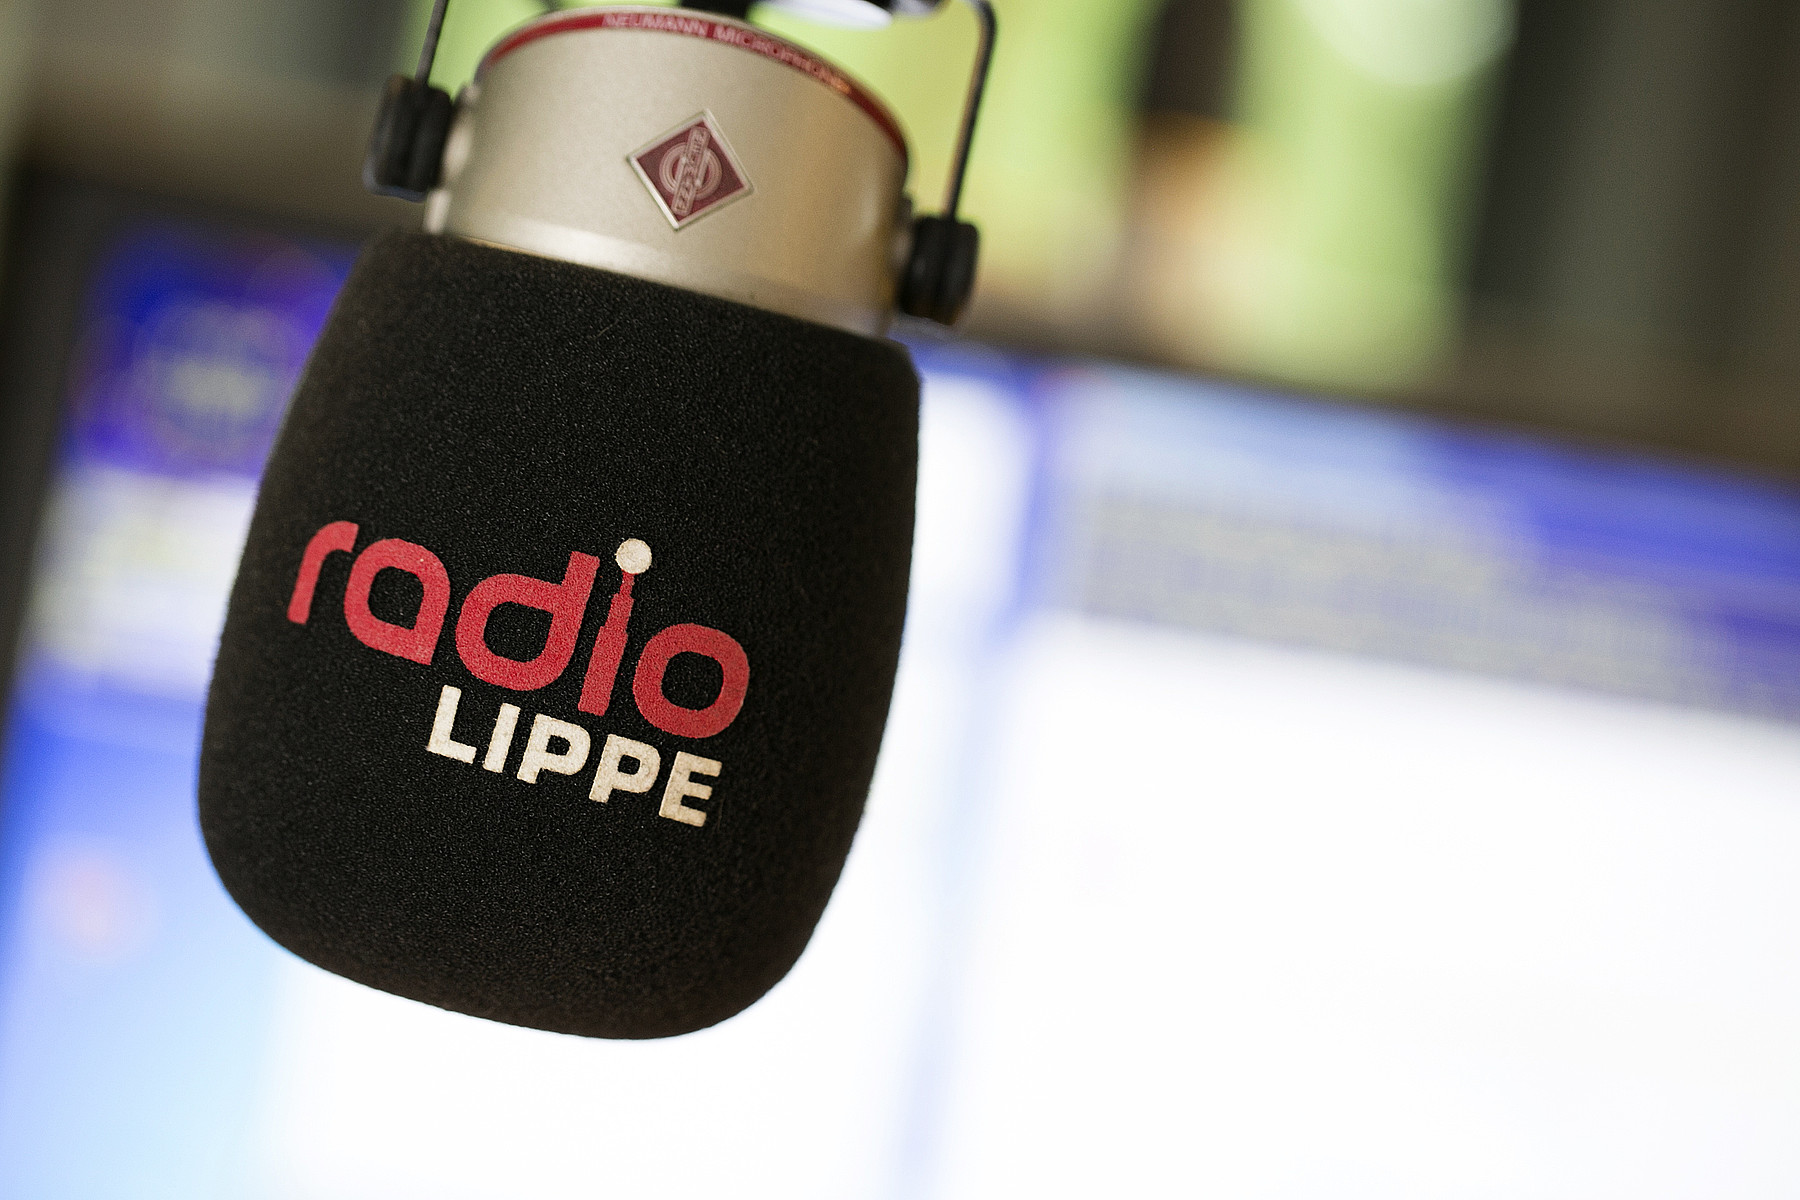 (c) Radiolippe.de